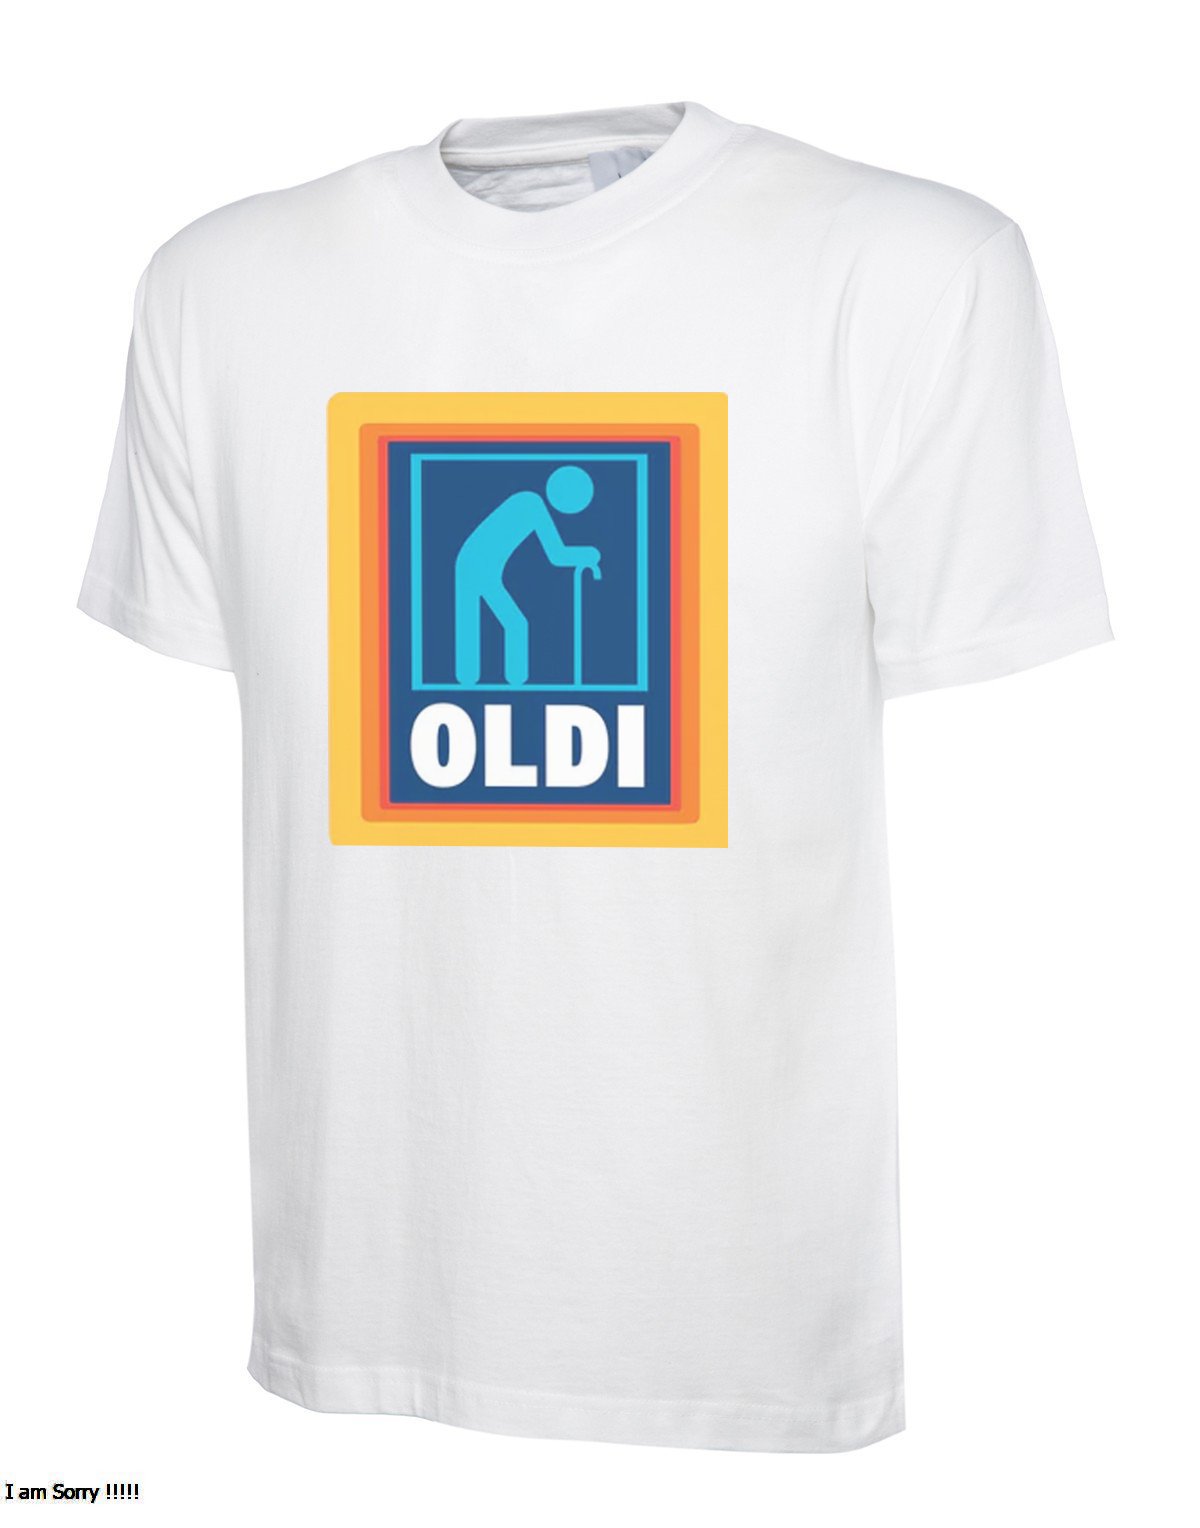 "OLDI" Tee - Wow T-Shirts